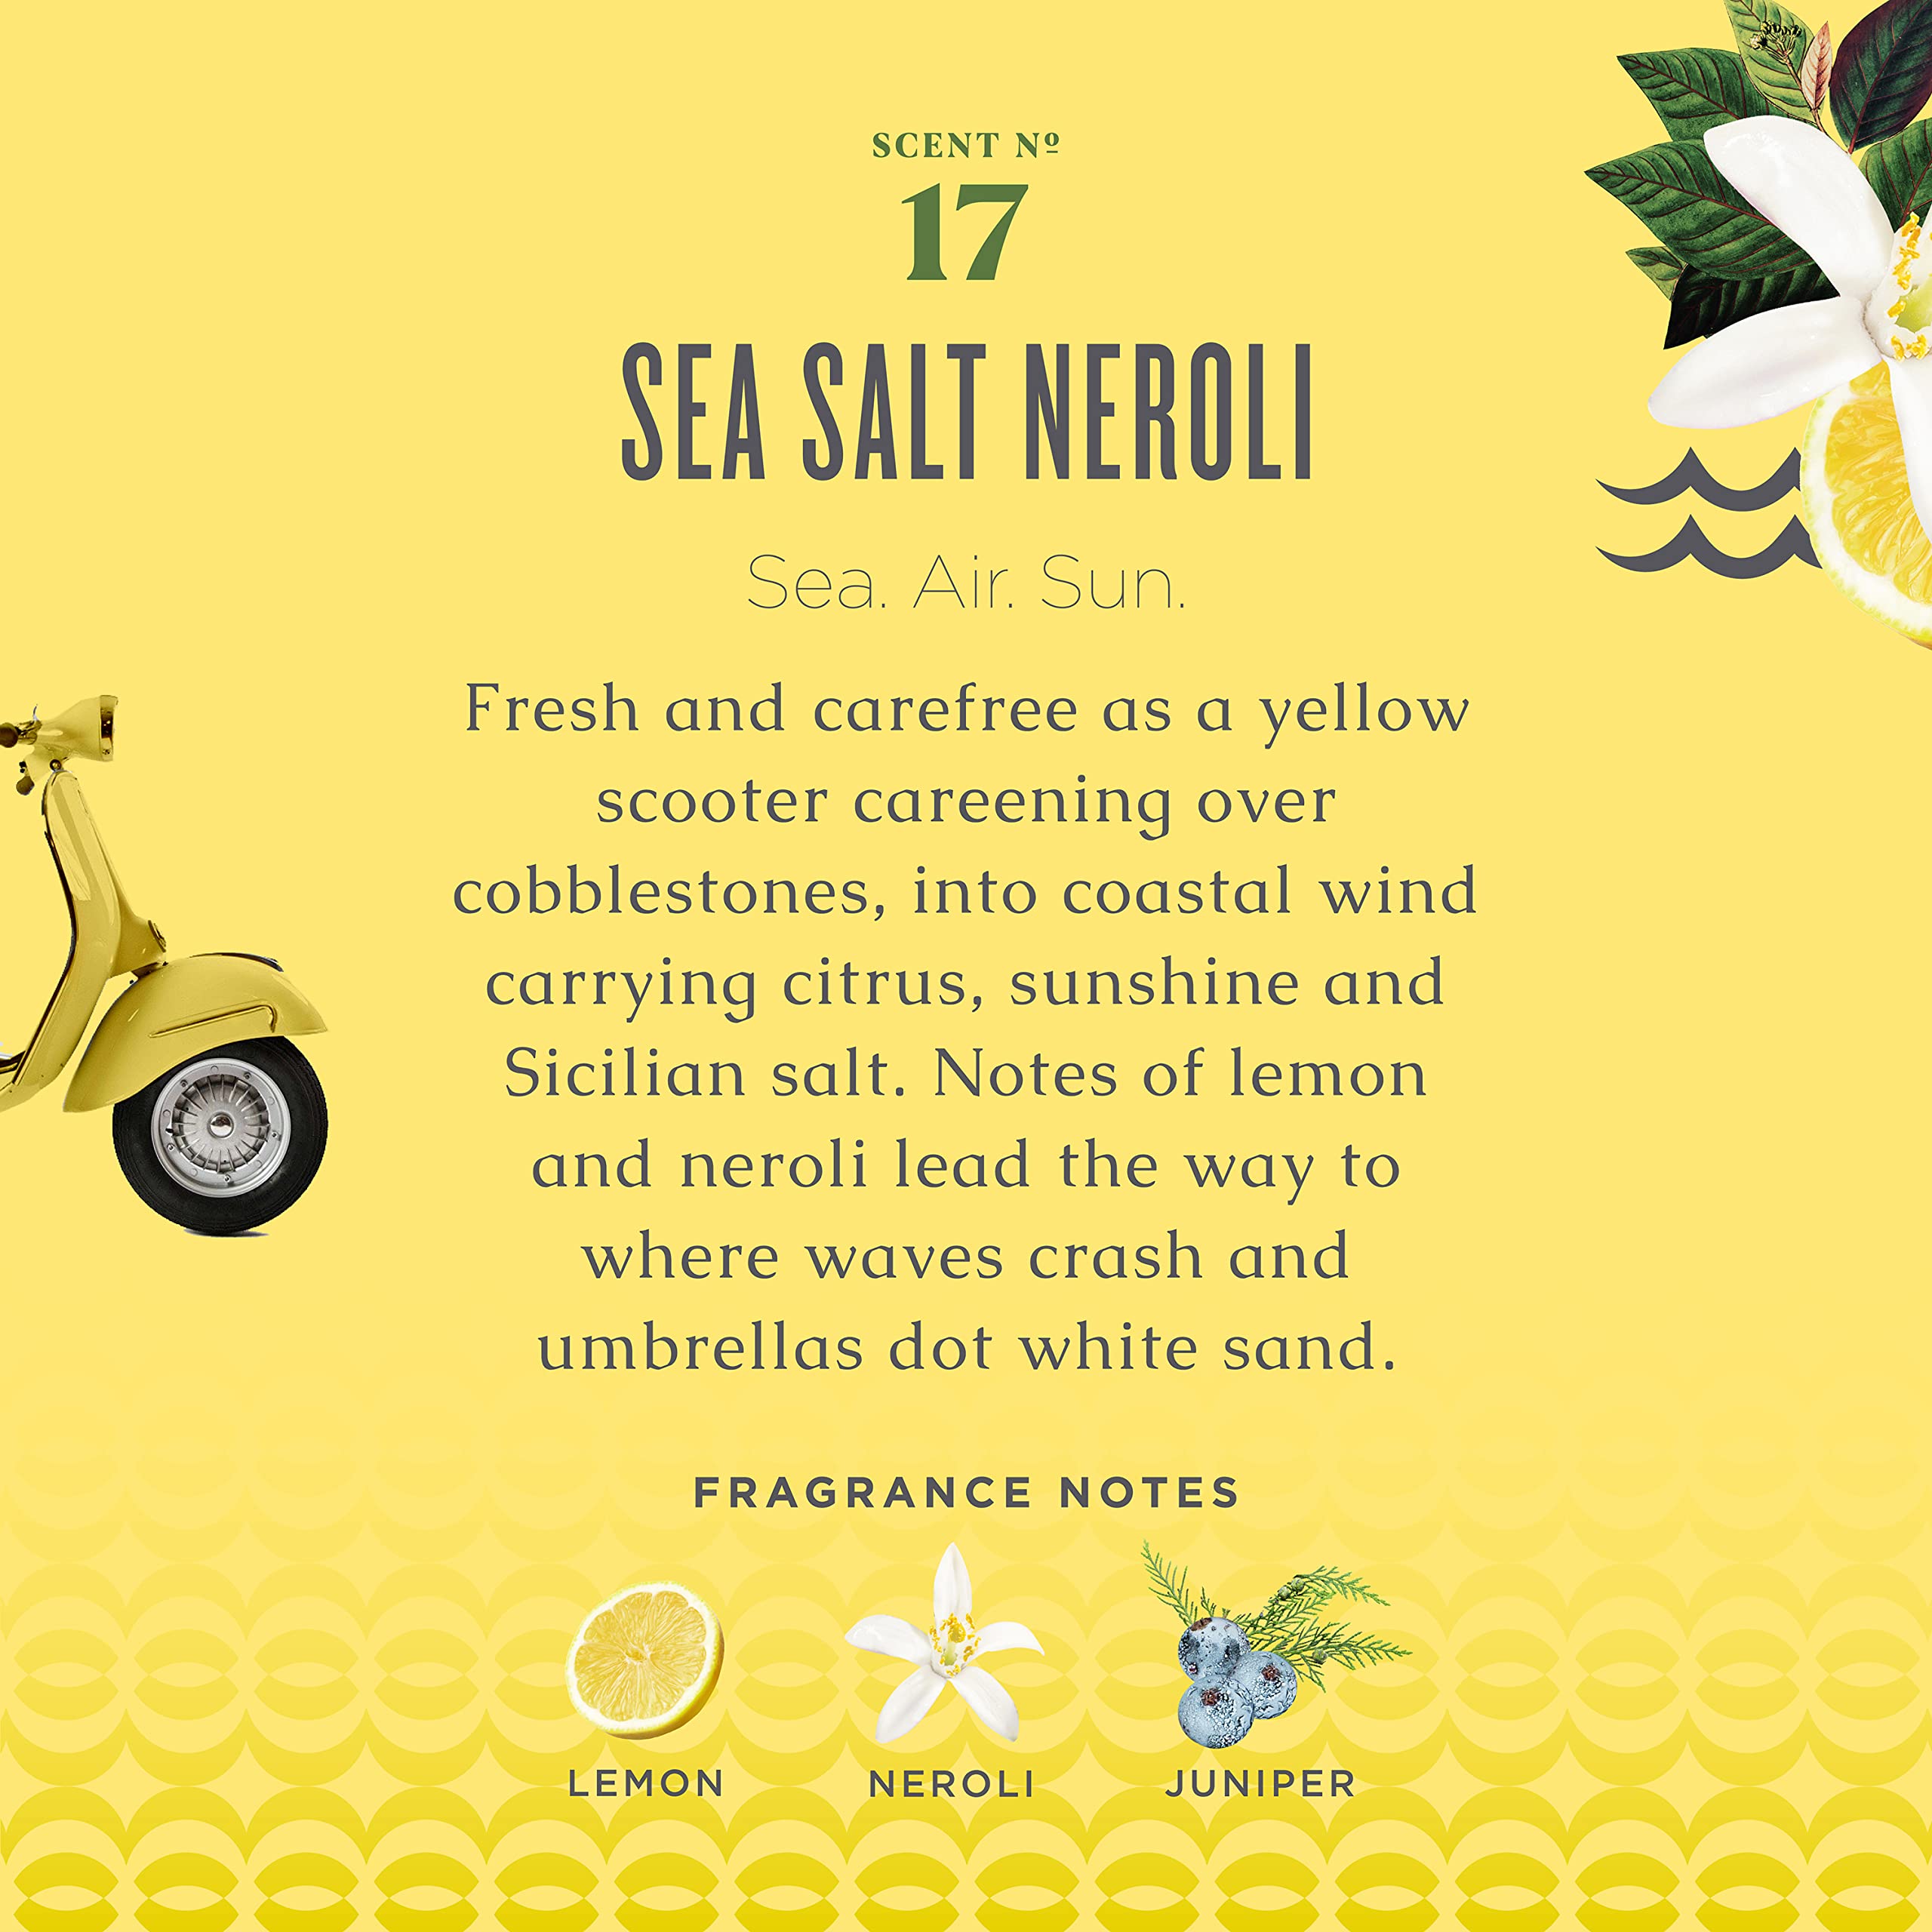 Caldrea Hand Soap Refill, Aloe Vera Gel, Olive Oil and Essential Oils to Cleanse and Condition, Sea Salt Neroli Scent, 32 oz